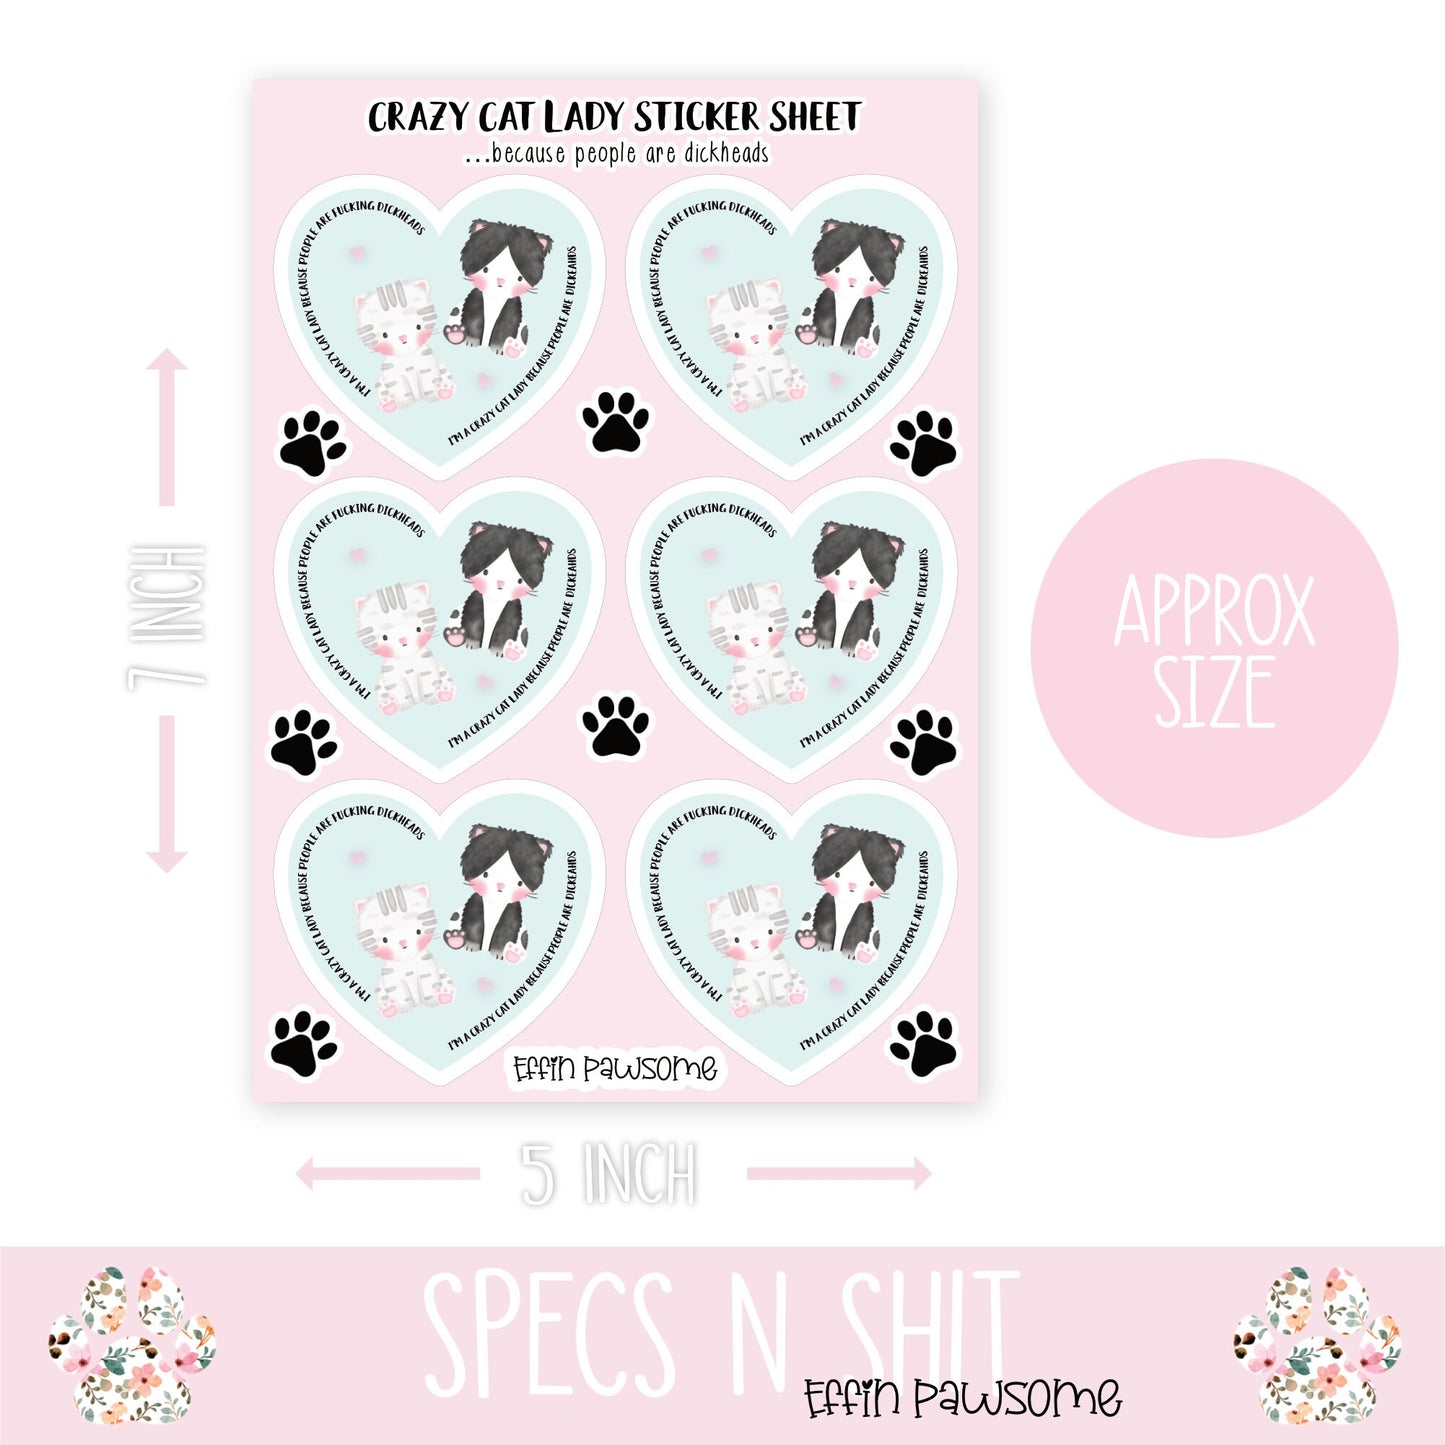 Cat Lady Sticker Sheet | Cat Stickers | Kitten stickers | Sticker Sheet | Journal Stickers | Novelty Gift Idea | Funny Decals | Cat Lovers